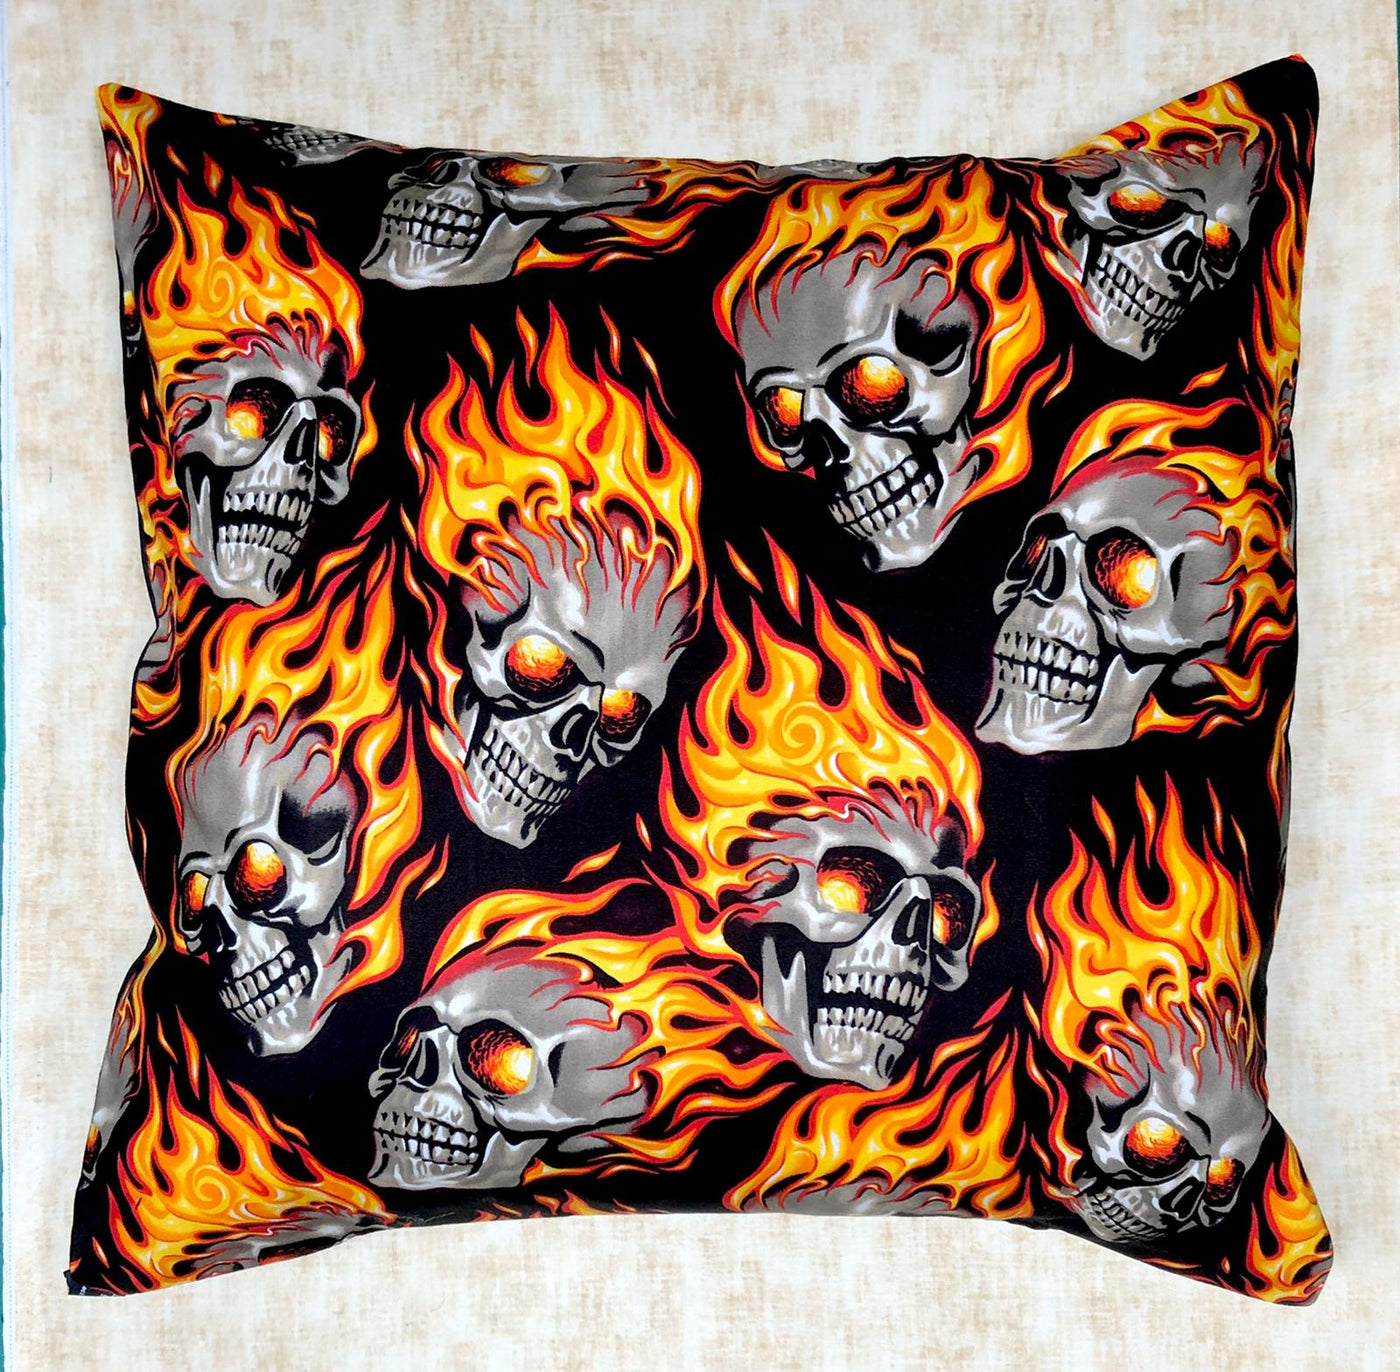 Skull & Skeleton Cushion Cover Fits 18 x 18 Cushion